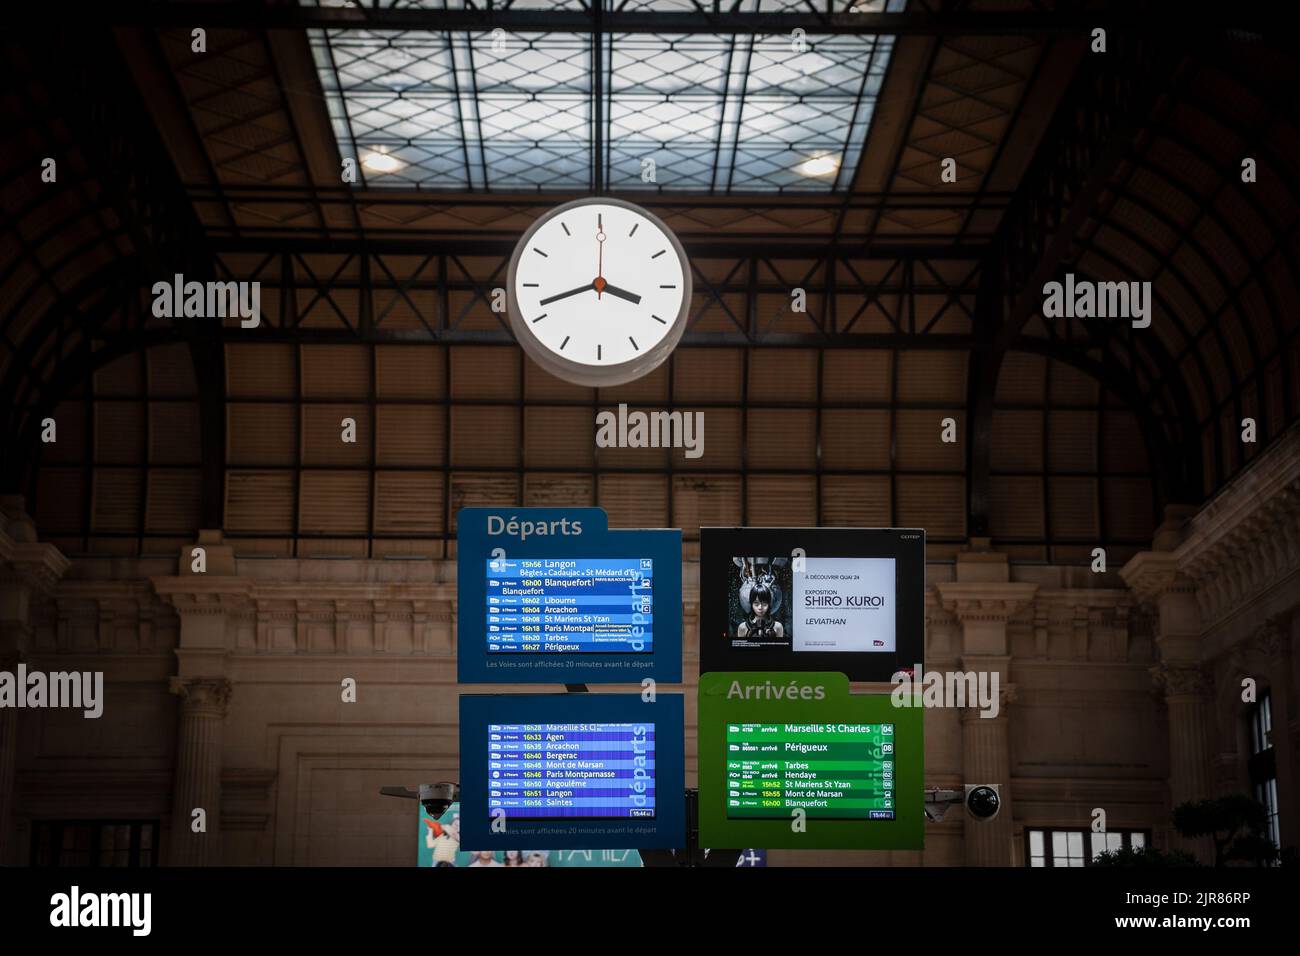 Gare de bordeaux saint jean -Fotos und -Bildmaterial in hoher Auflösung –  Alamy